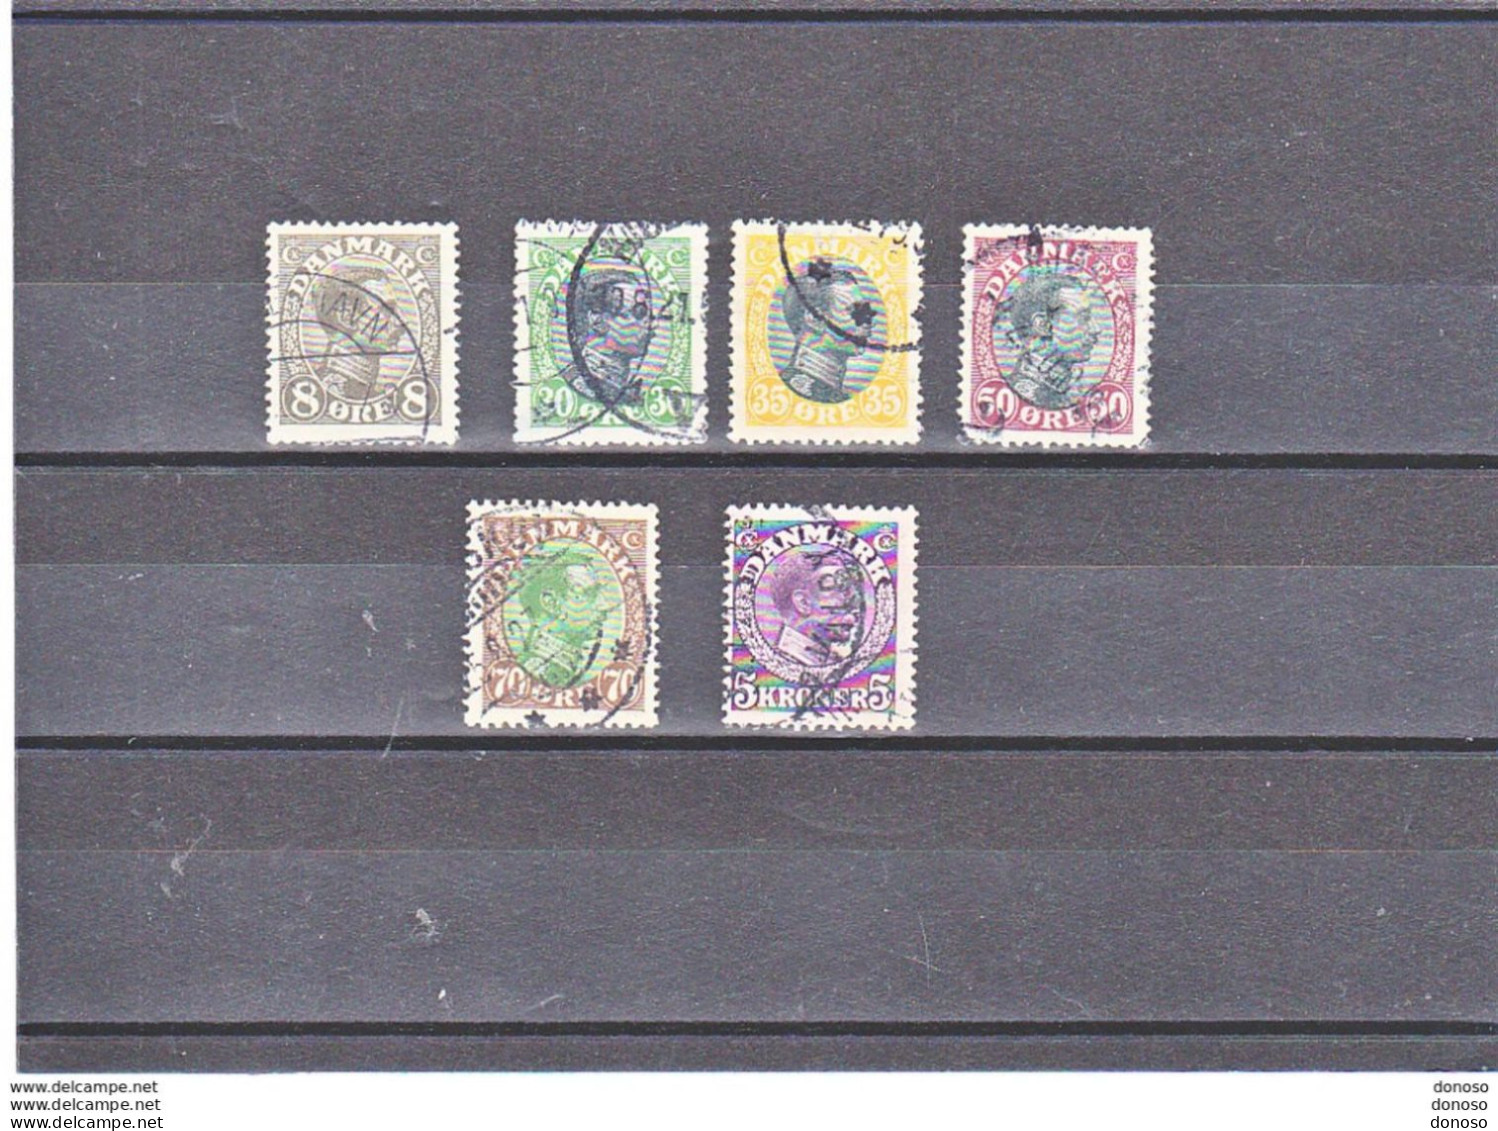 DANEMARK 1919 Yvert 106, 109-110, 112, 114, 116 Oblitéré, Cote : 37.50 Euros - Used Stamps